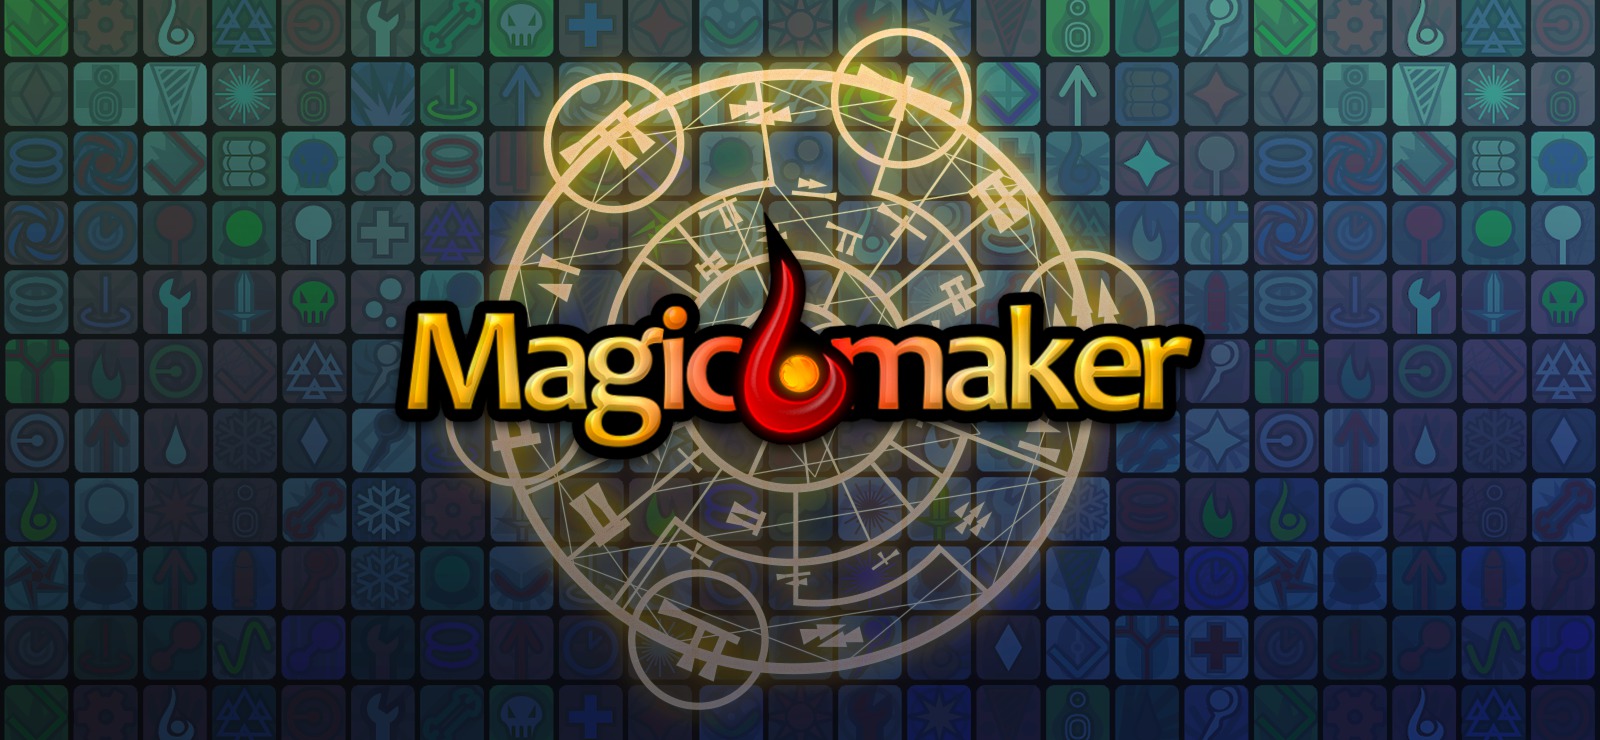 Magicmaker HD wallpapers, Desktop wallpaper - most viewed